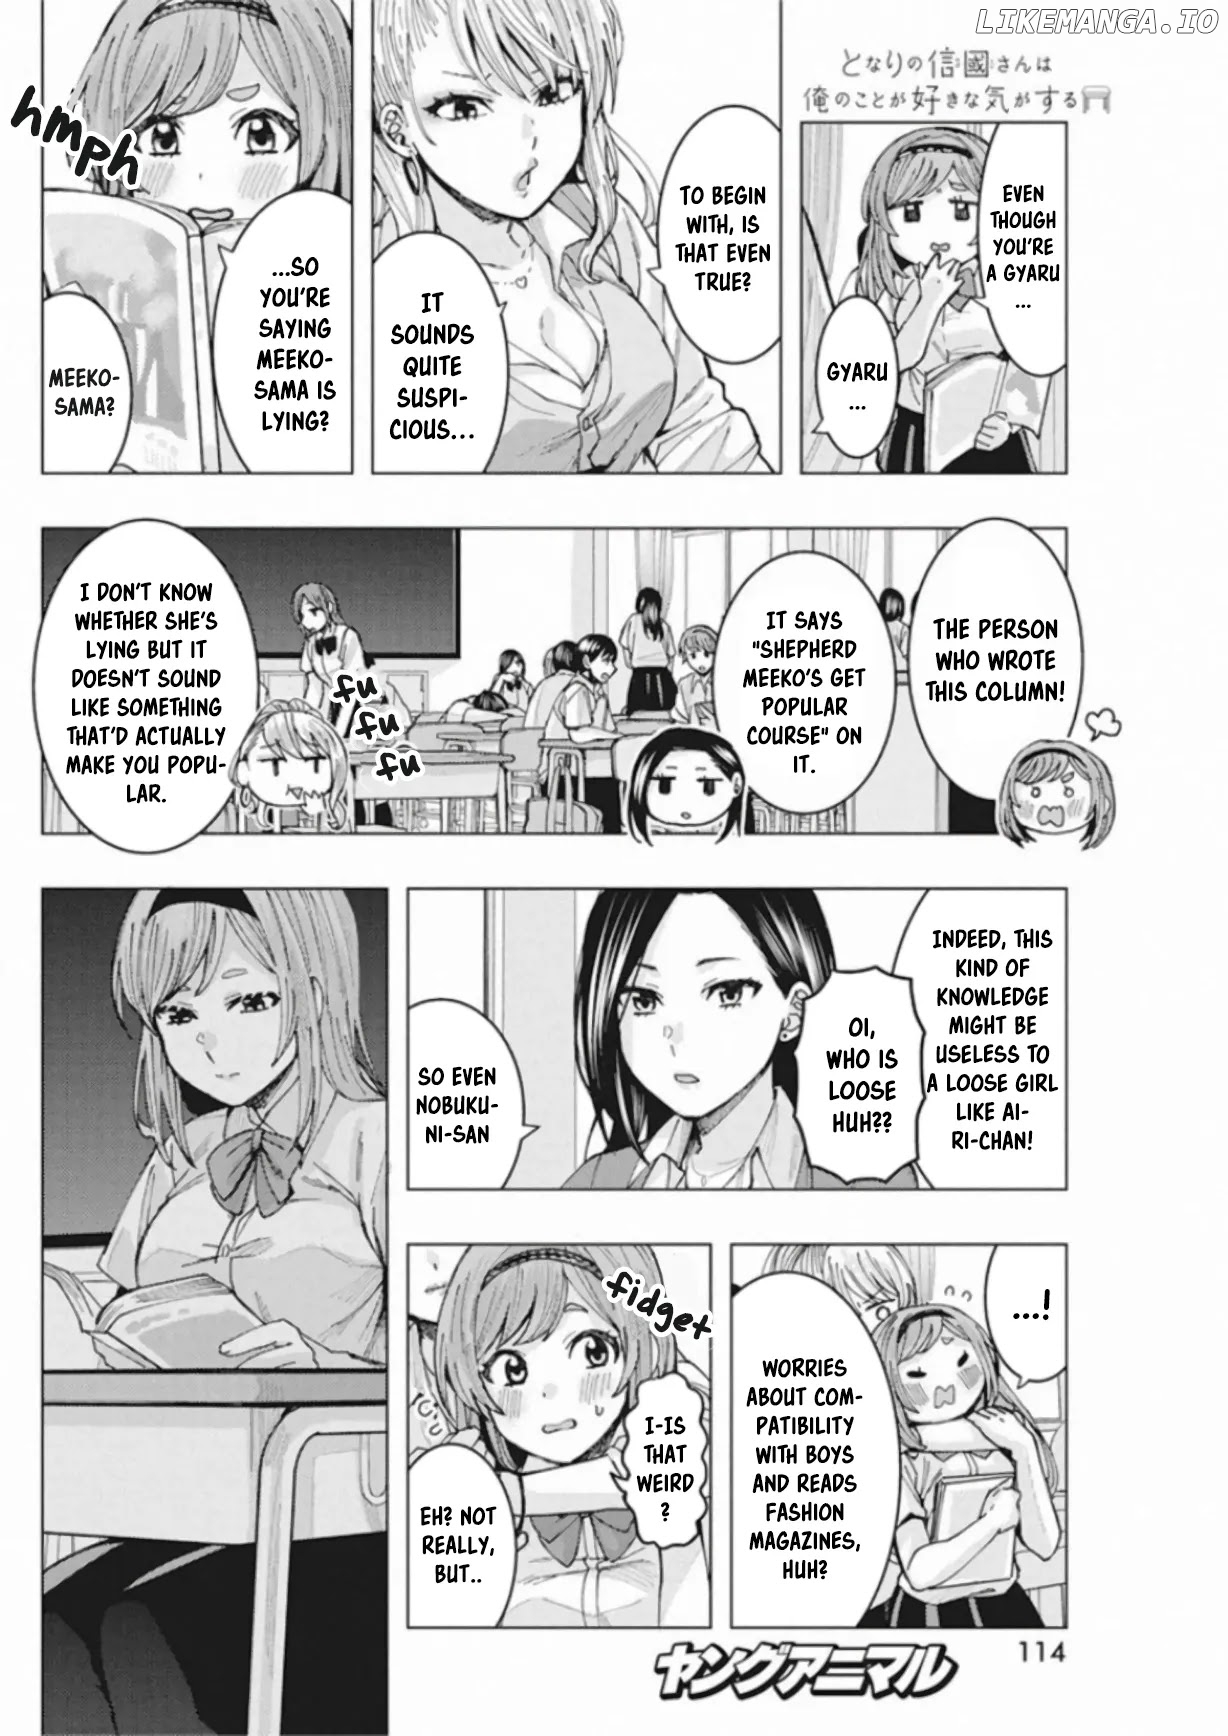 "nobukuni-San" Does She Like Me? chapter 4 - page 7